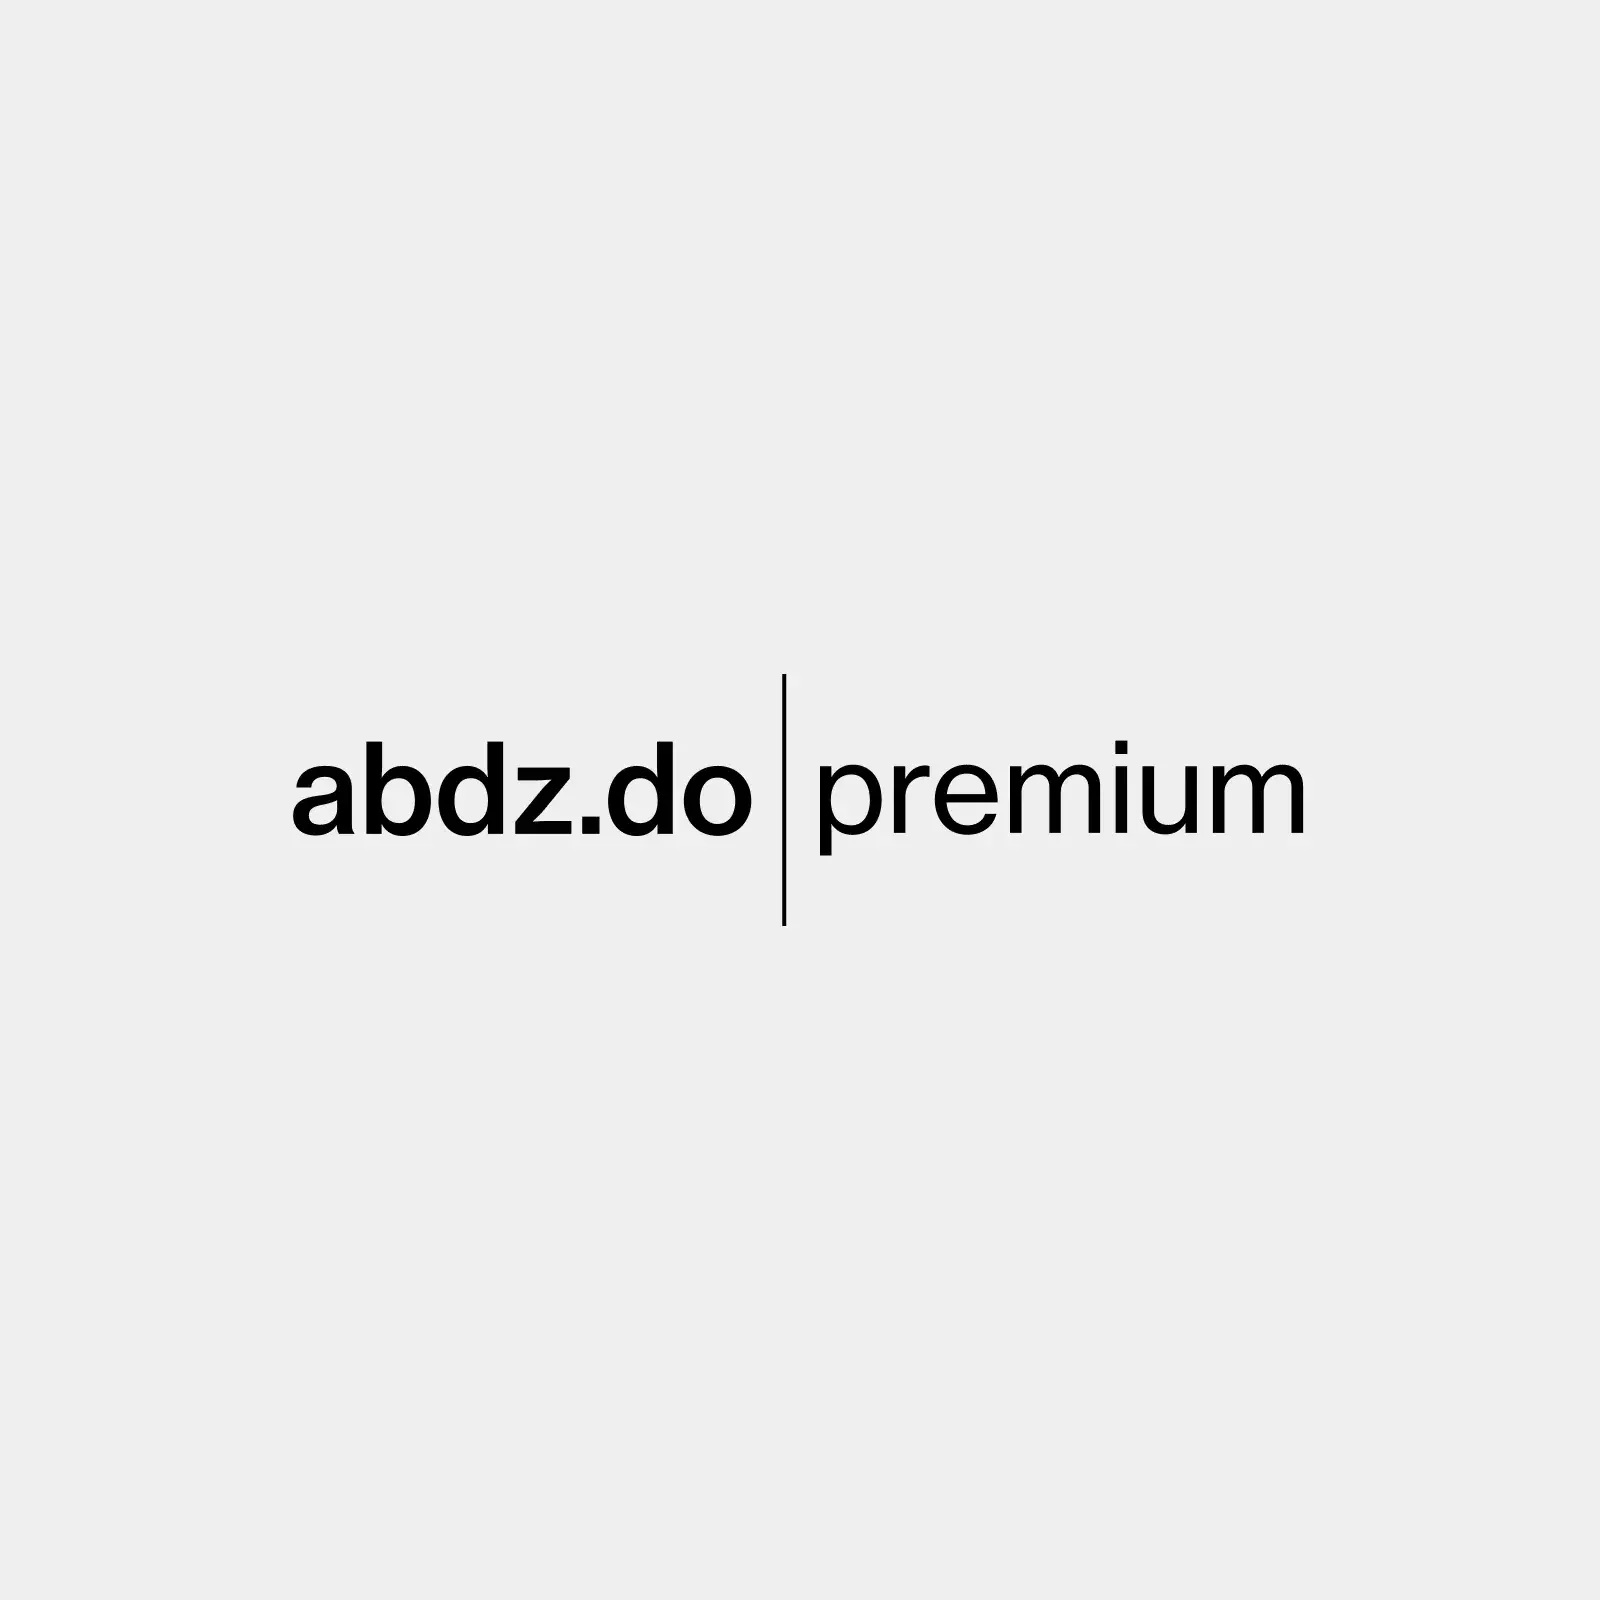 From Ad-Frustration to Inspiration: Choose Abduzeedo Premium!